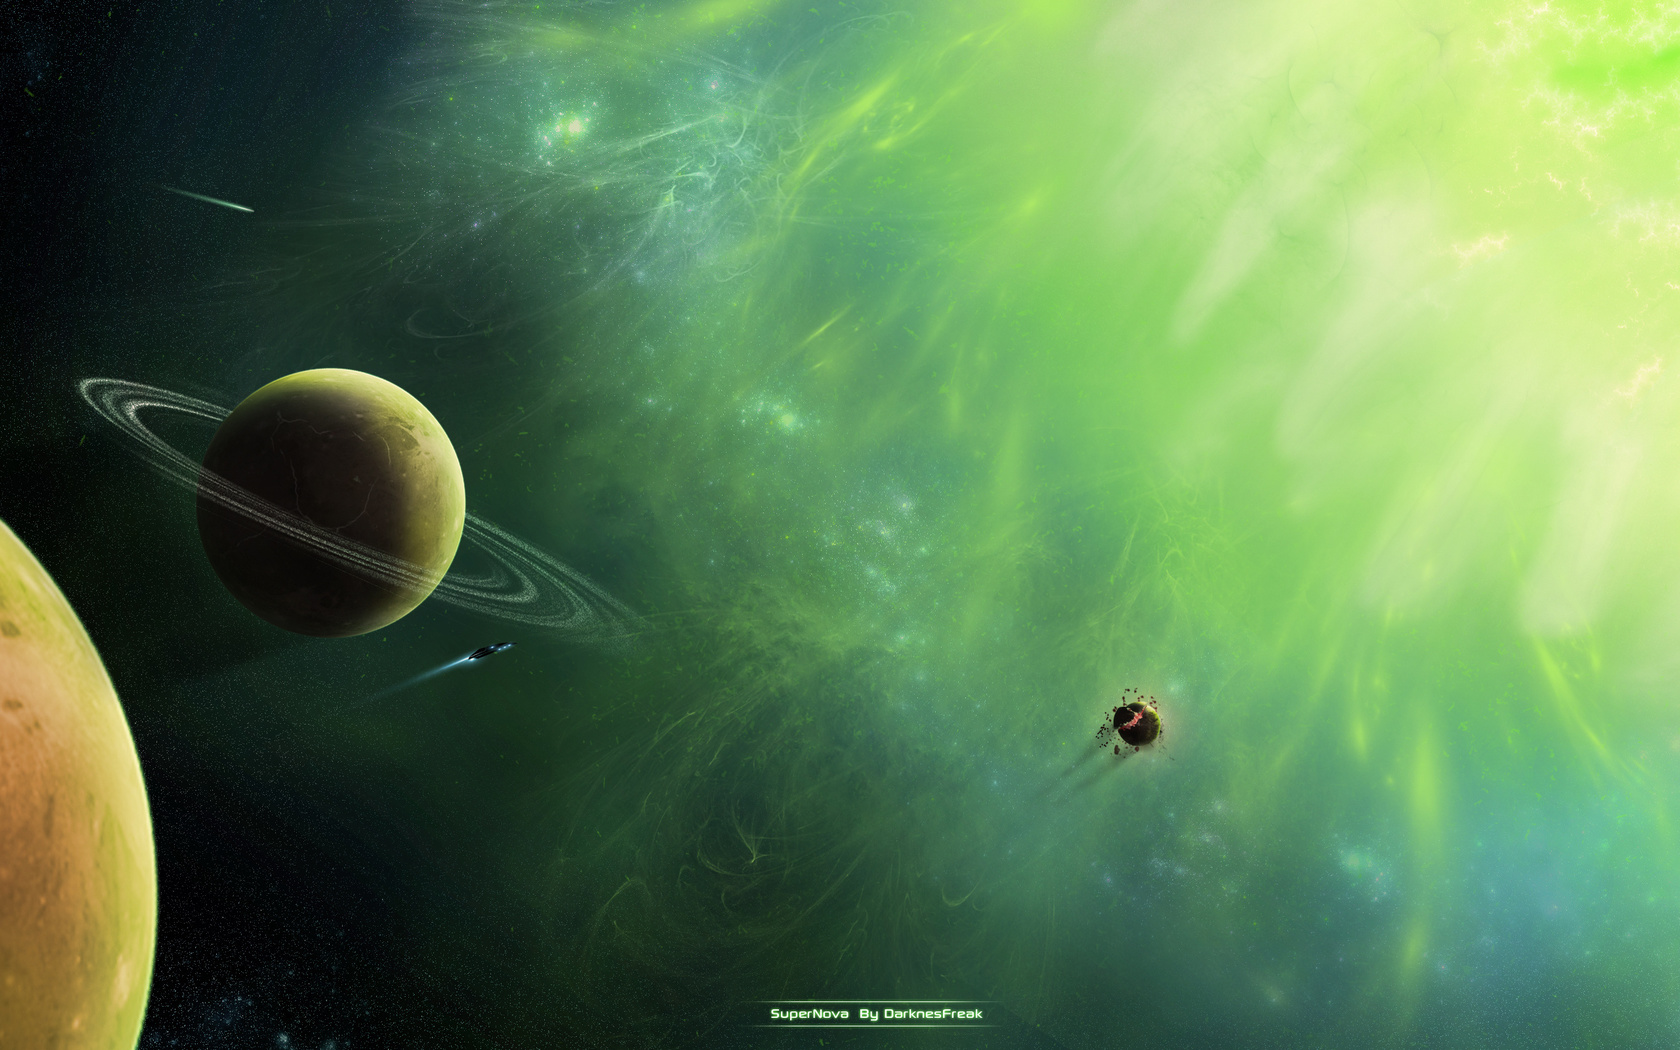 planet, Supernova, sci fi, green